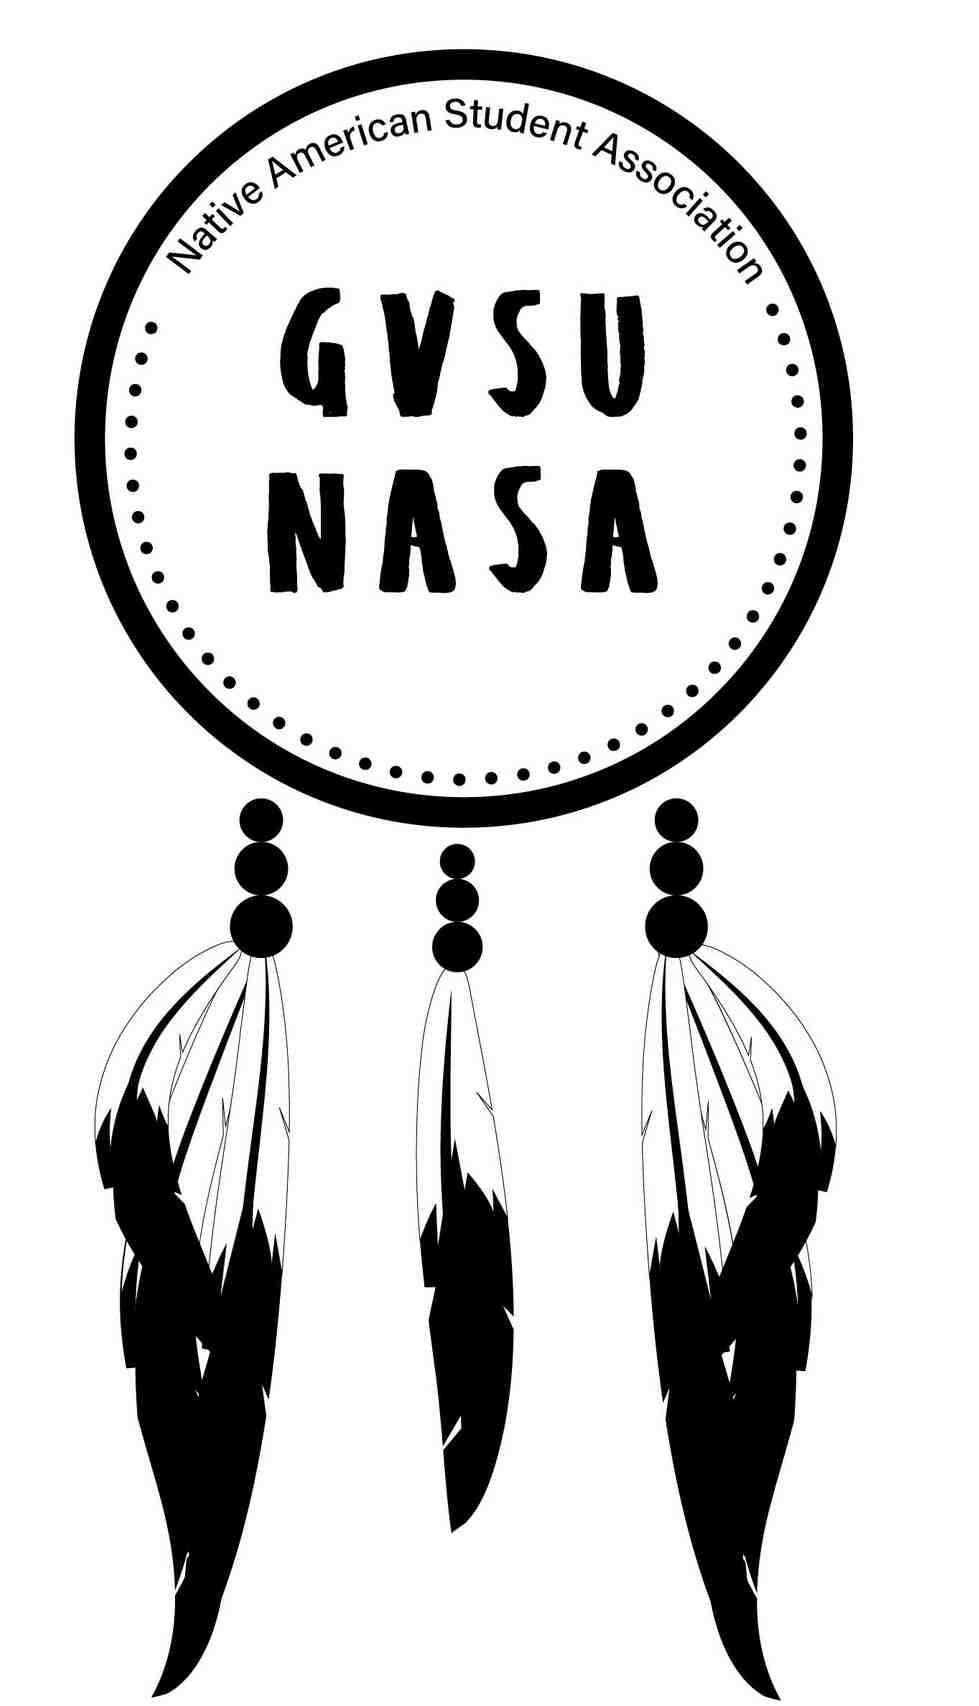 Native American Student Association Logo